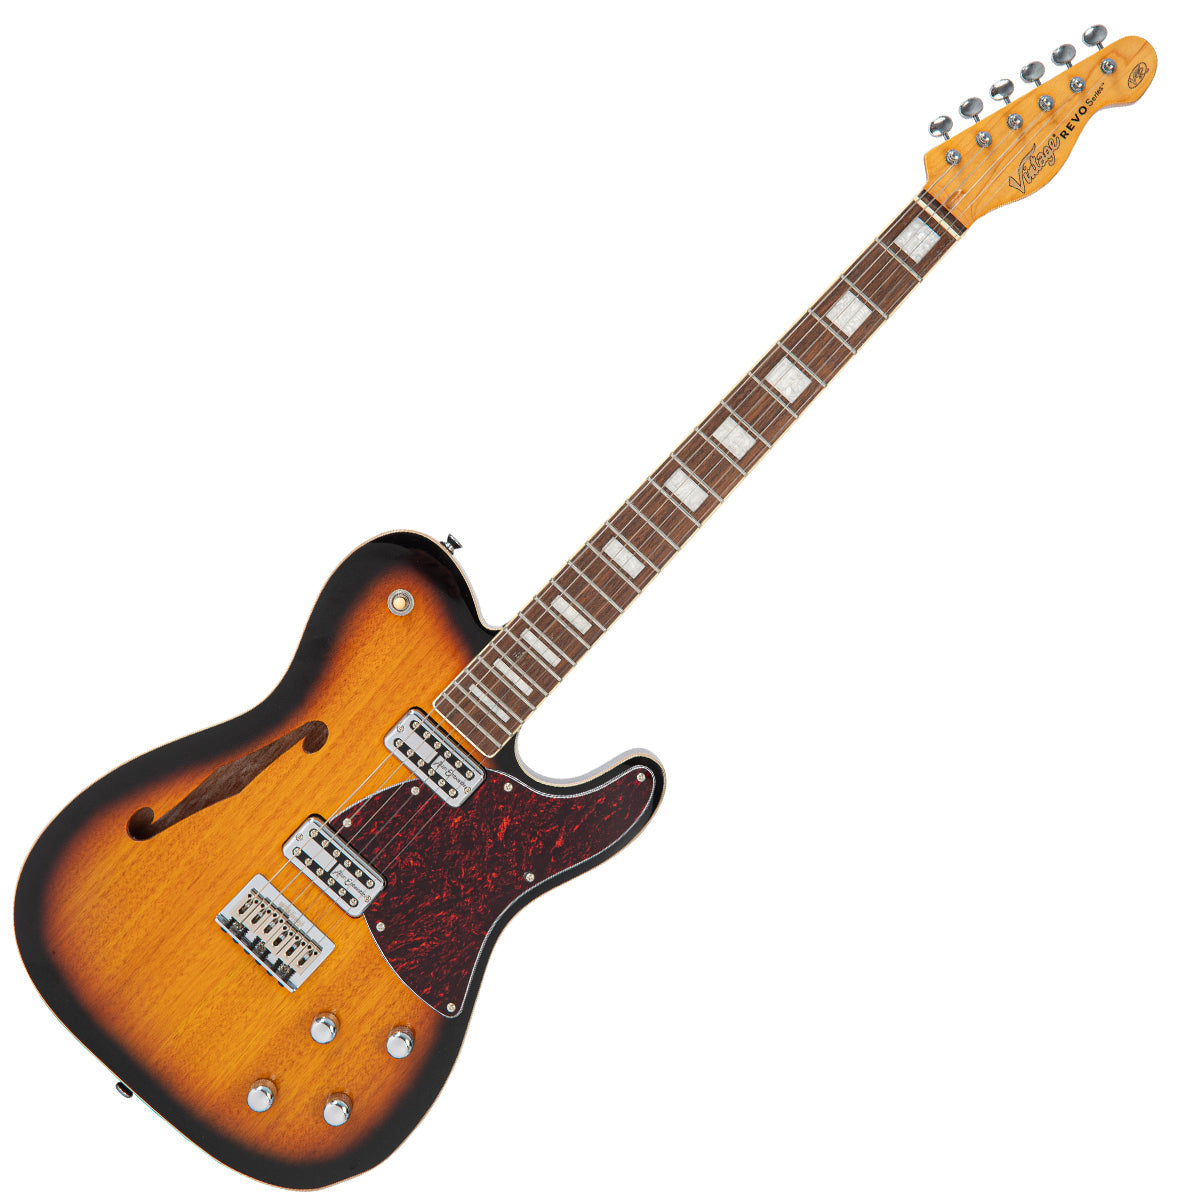 Vintage REVO Series 'Midline' Guitar ~ Two-Tone Sunburst, Electric Guitars for sale at Richards Guitars.